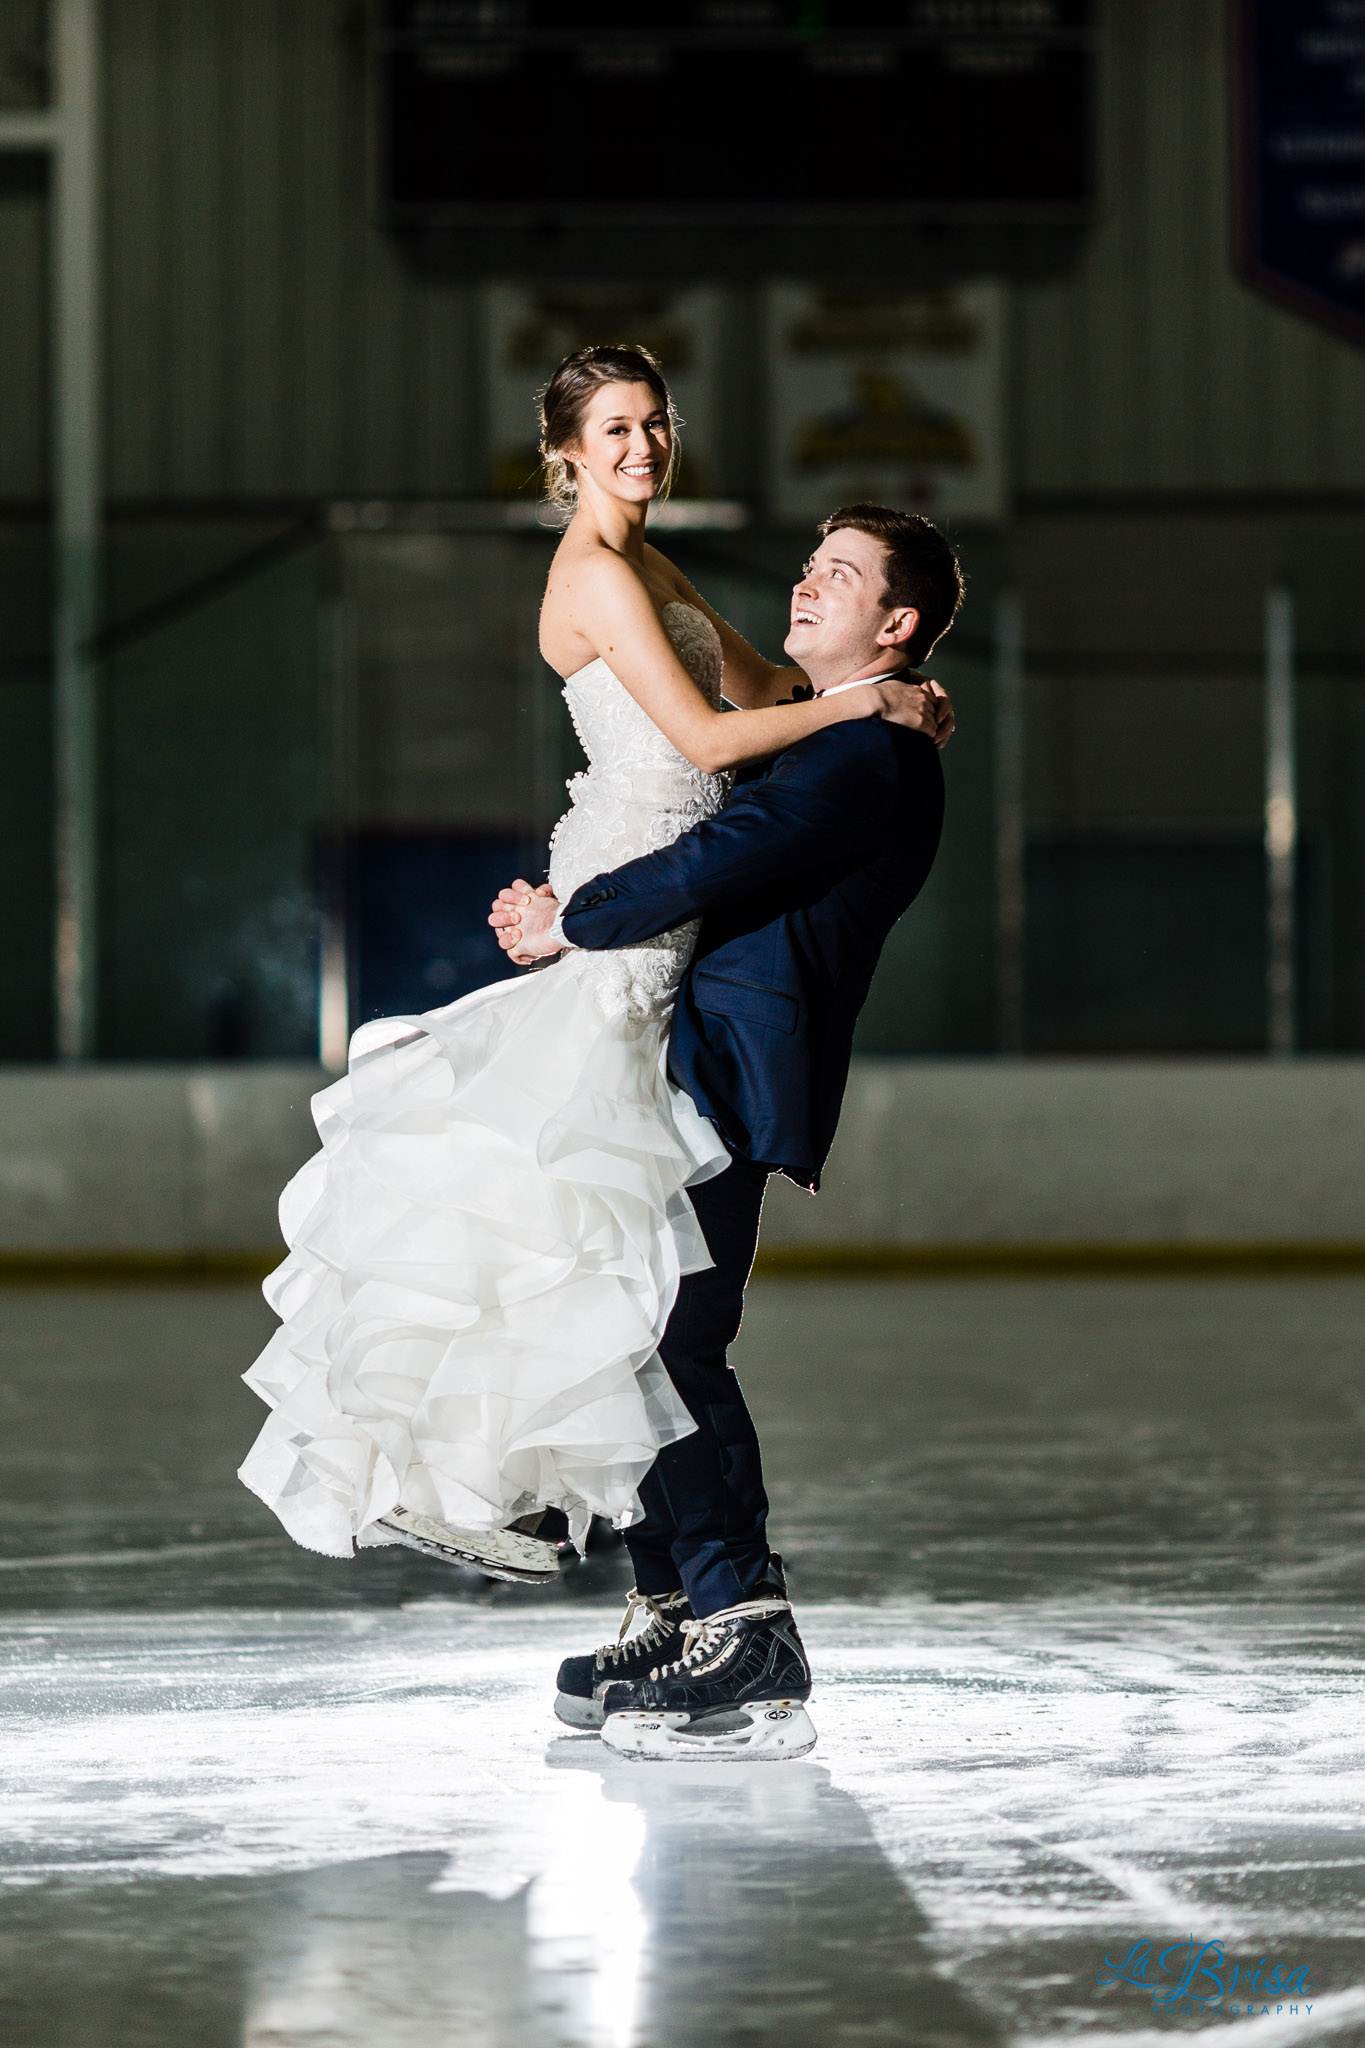 Allie & Patrick | Millwright’s Wedding | Simsbury, CT